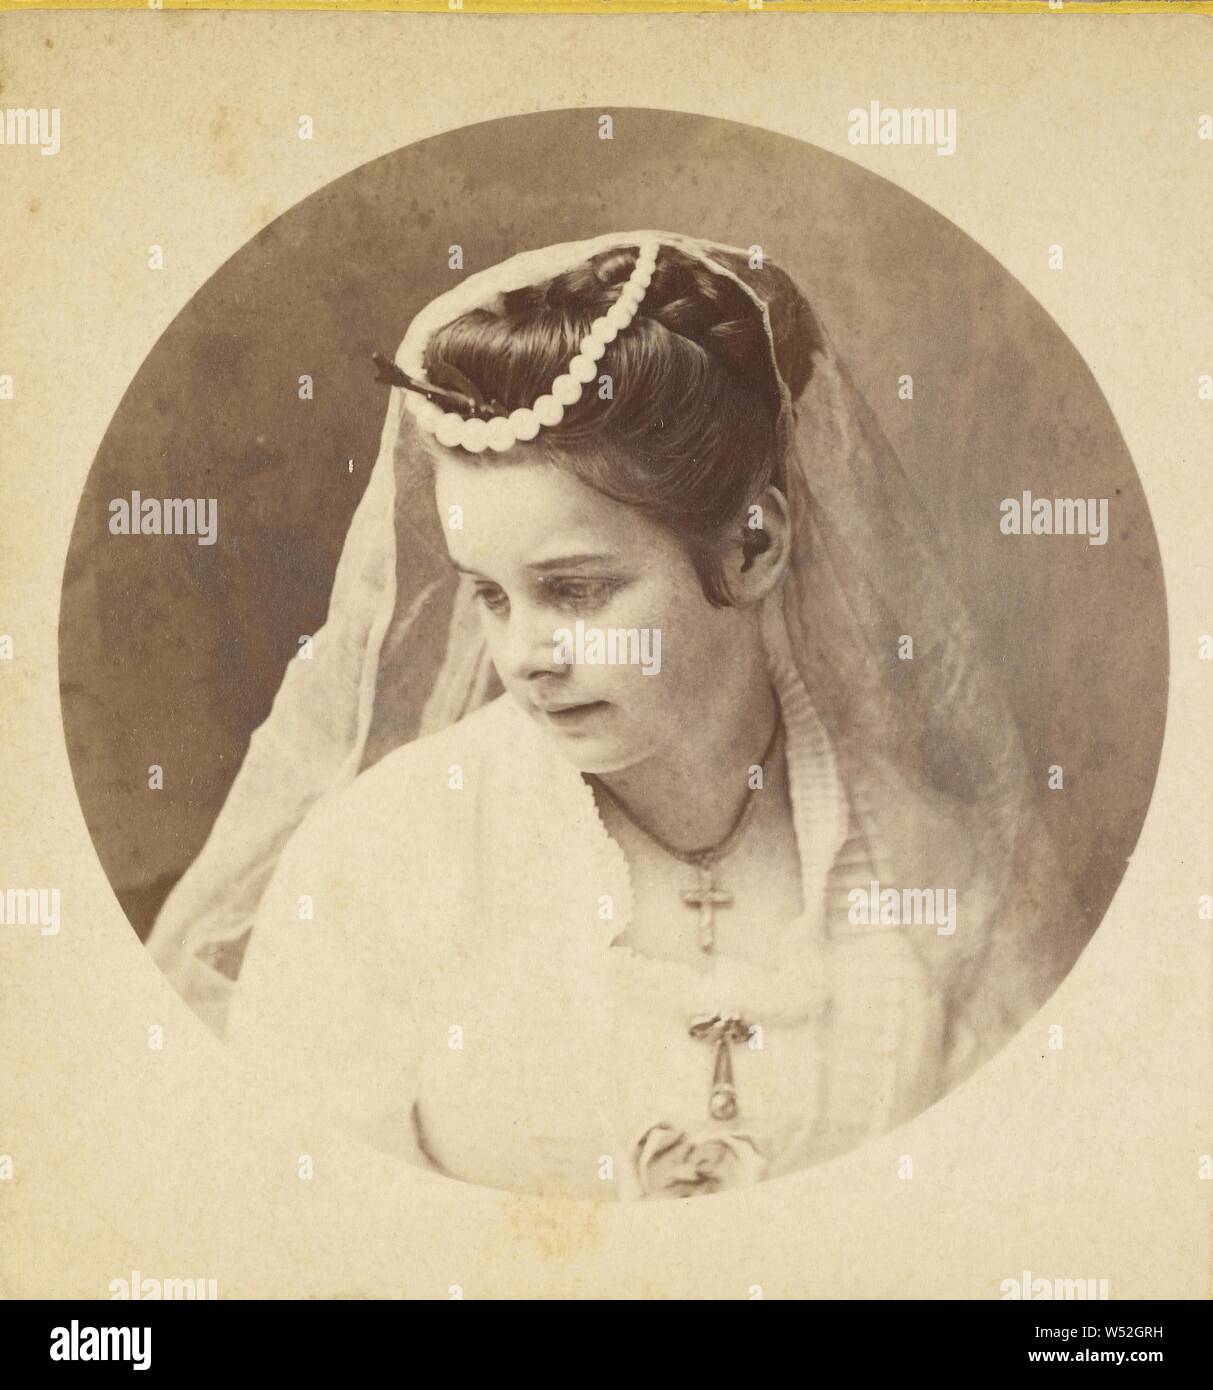 The Bride., L. E. Walker (American, 1826 - 1916, active Warsaw, New York), about 1870, Albumen silver print Stock Photo